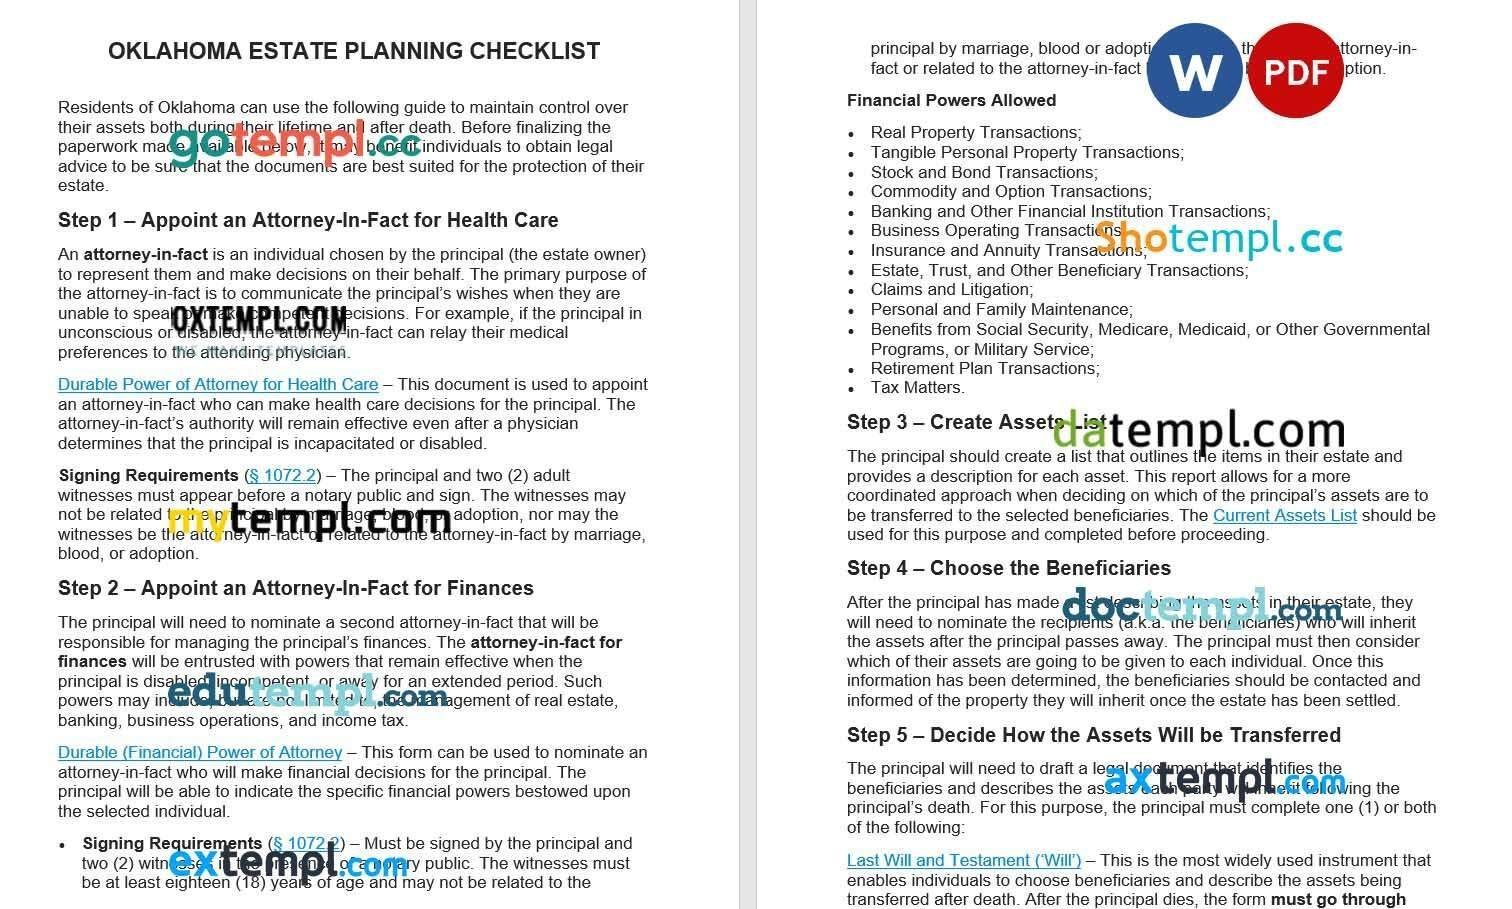 Oklahoma Estate Planning Checklist example, fully editable